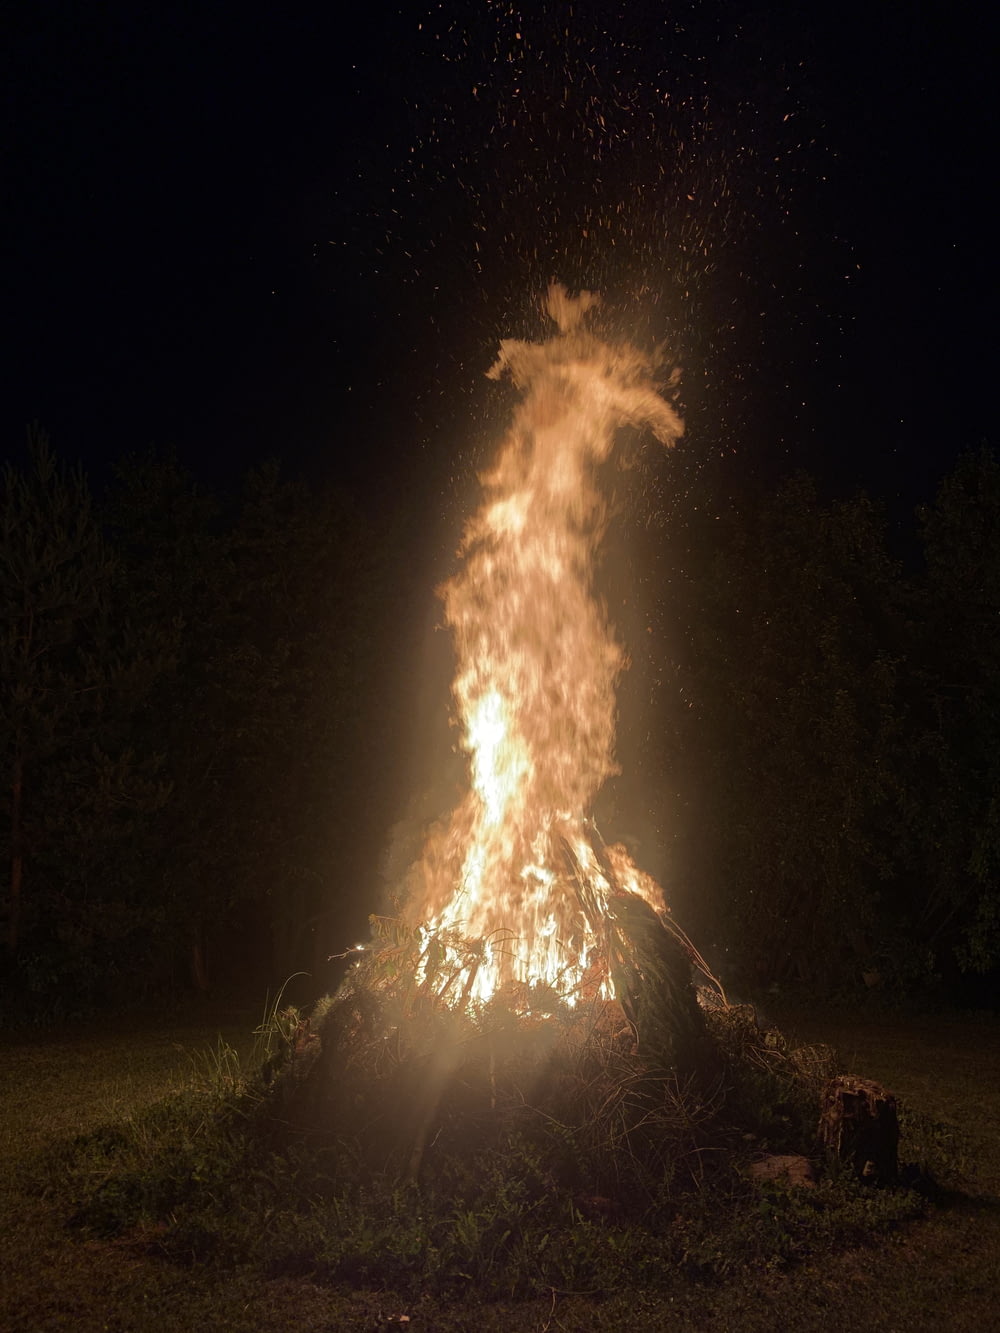 a bonfire is lit in a field at night